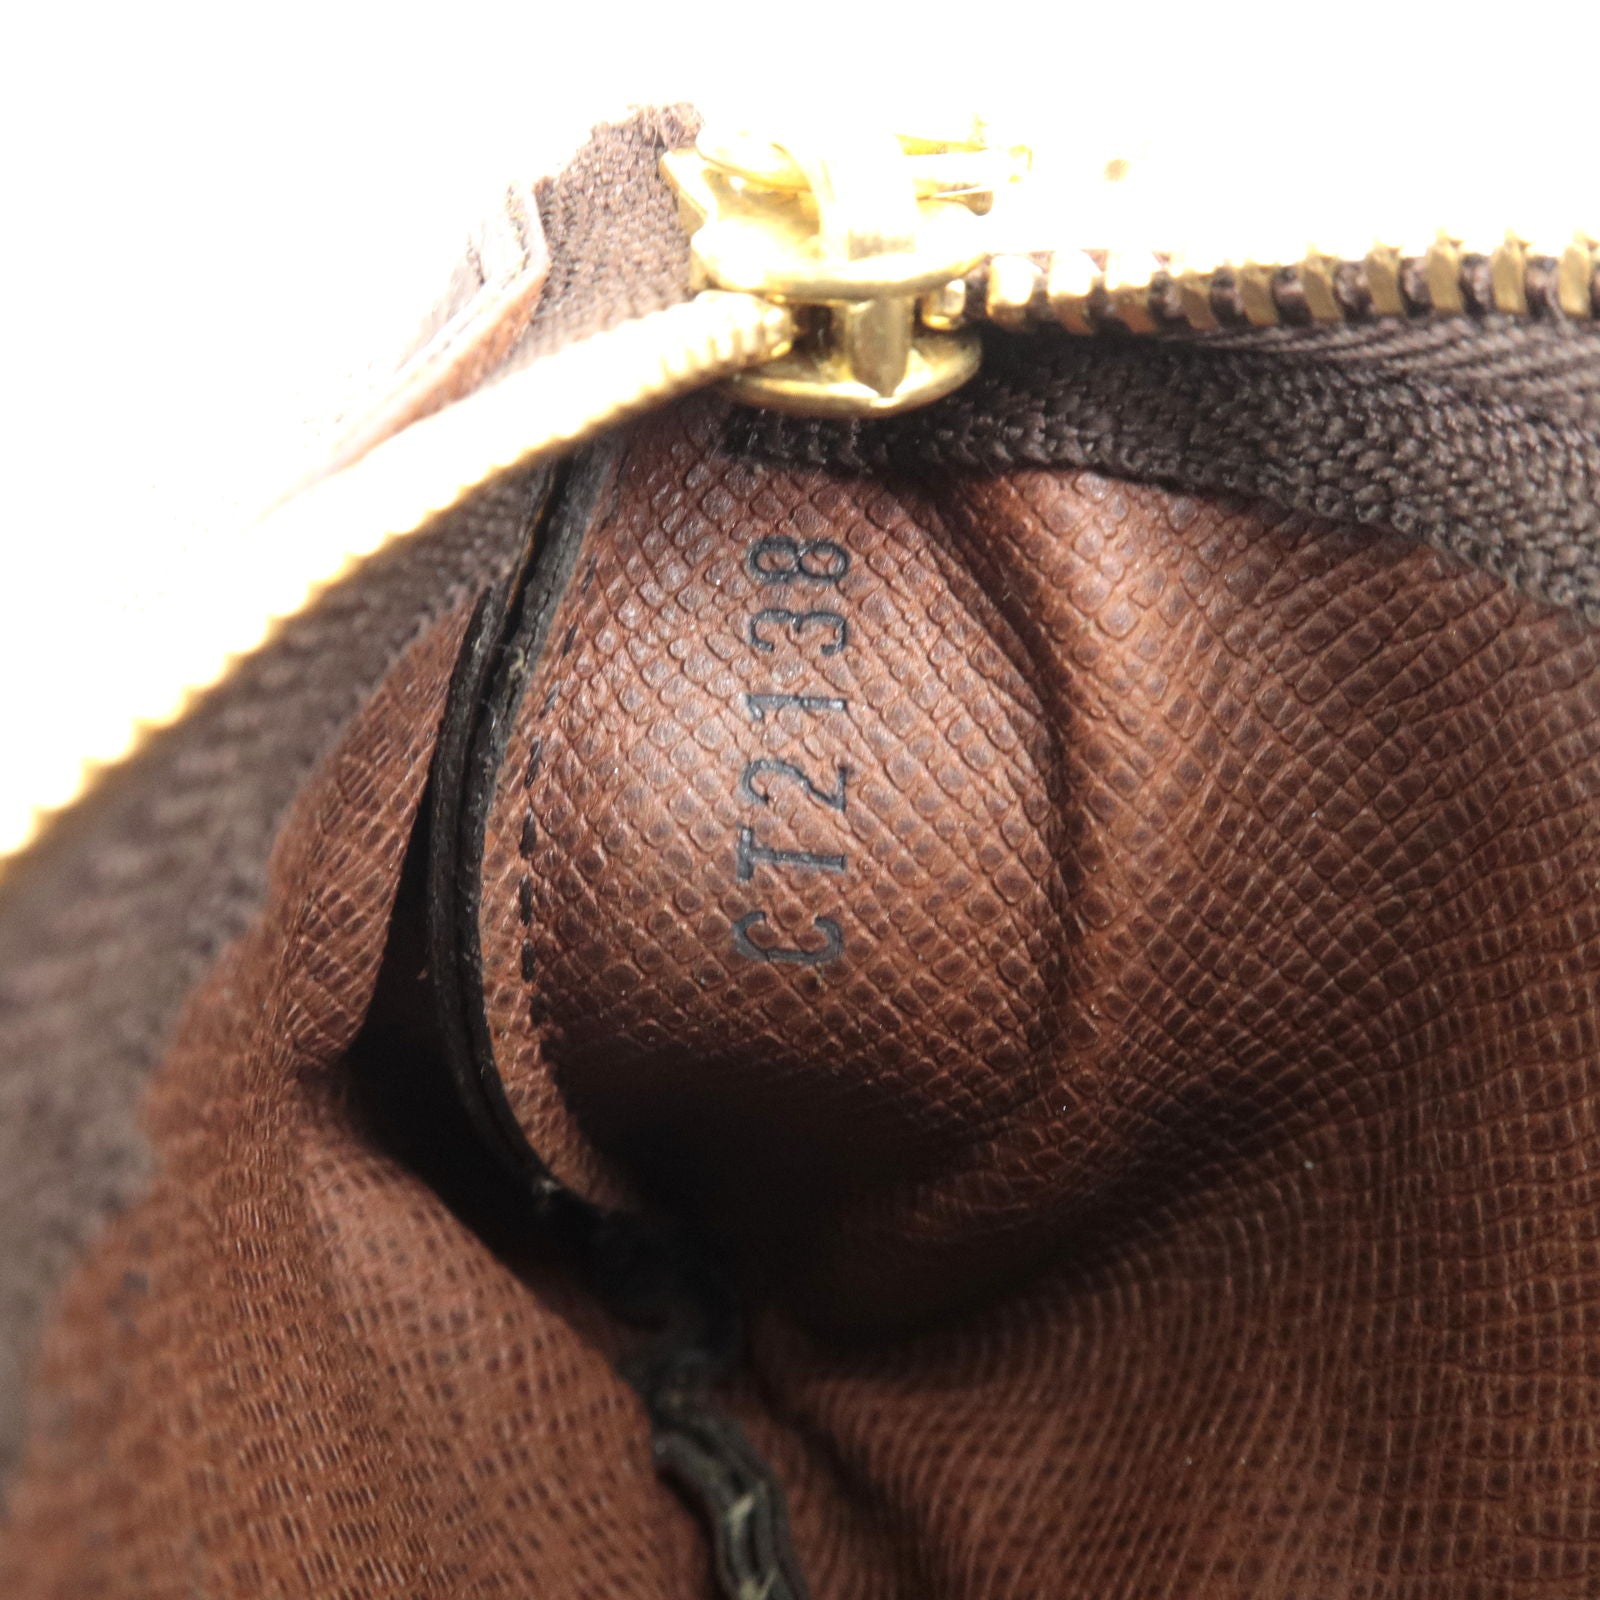 Louis Vuitton Pont NEUF in Black Handbag - Authentic Pre-Owned Designer Handbags